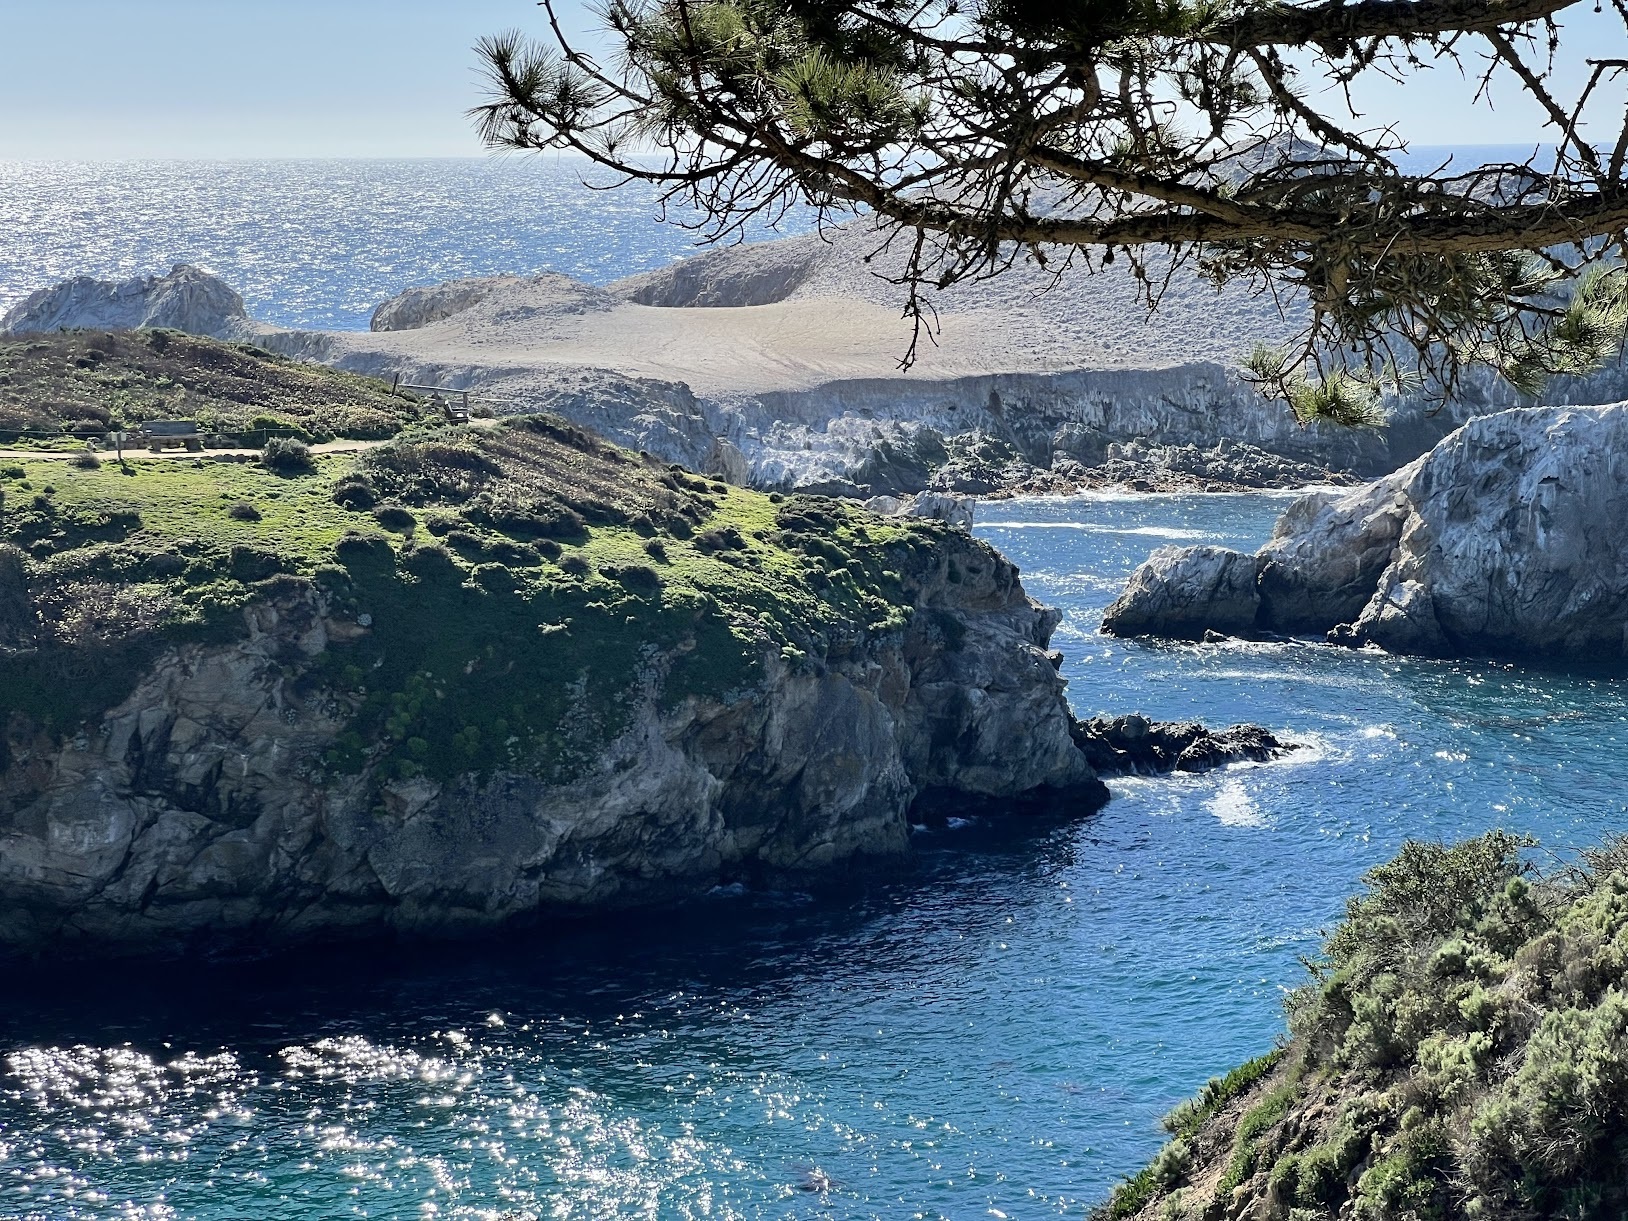 a rocky coastline with a tree